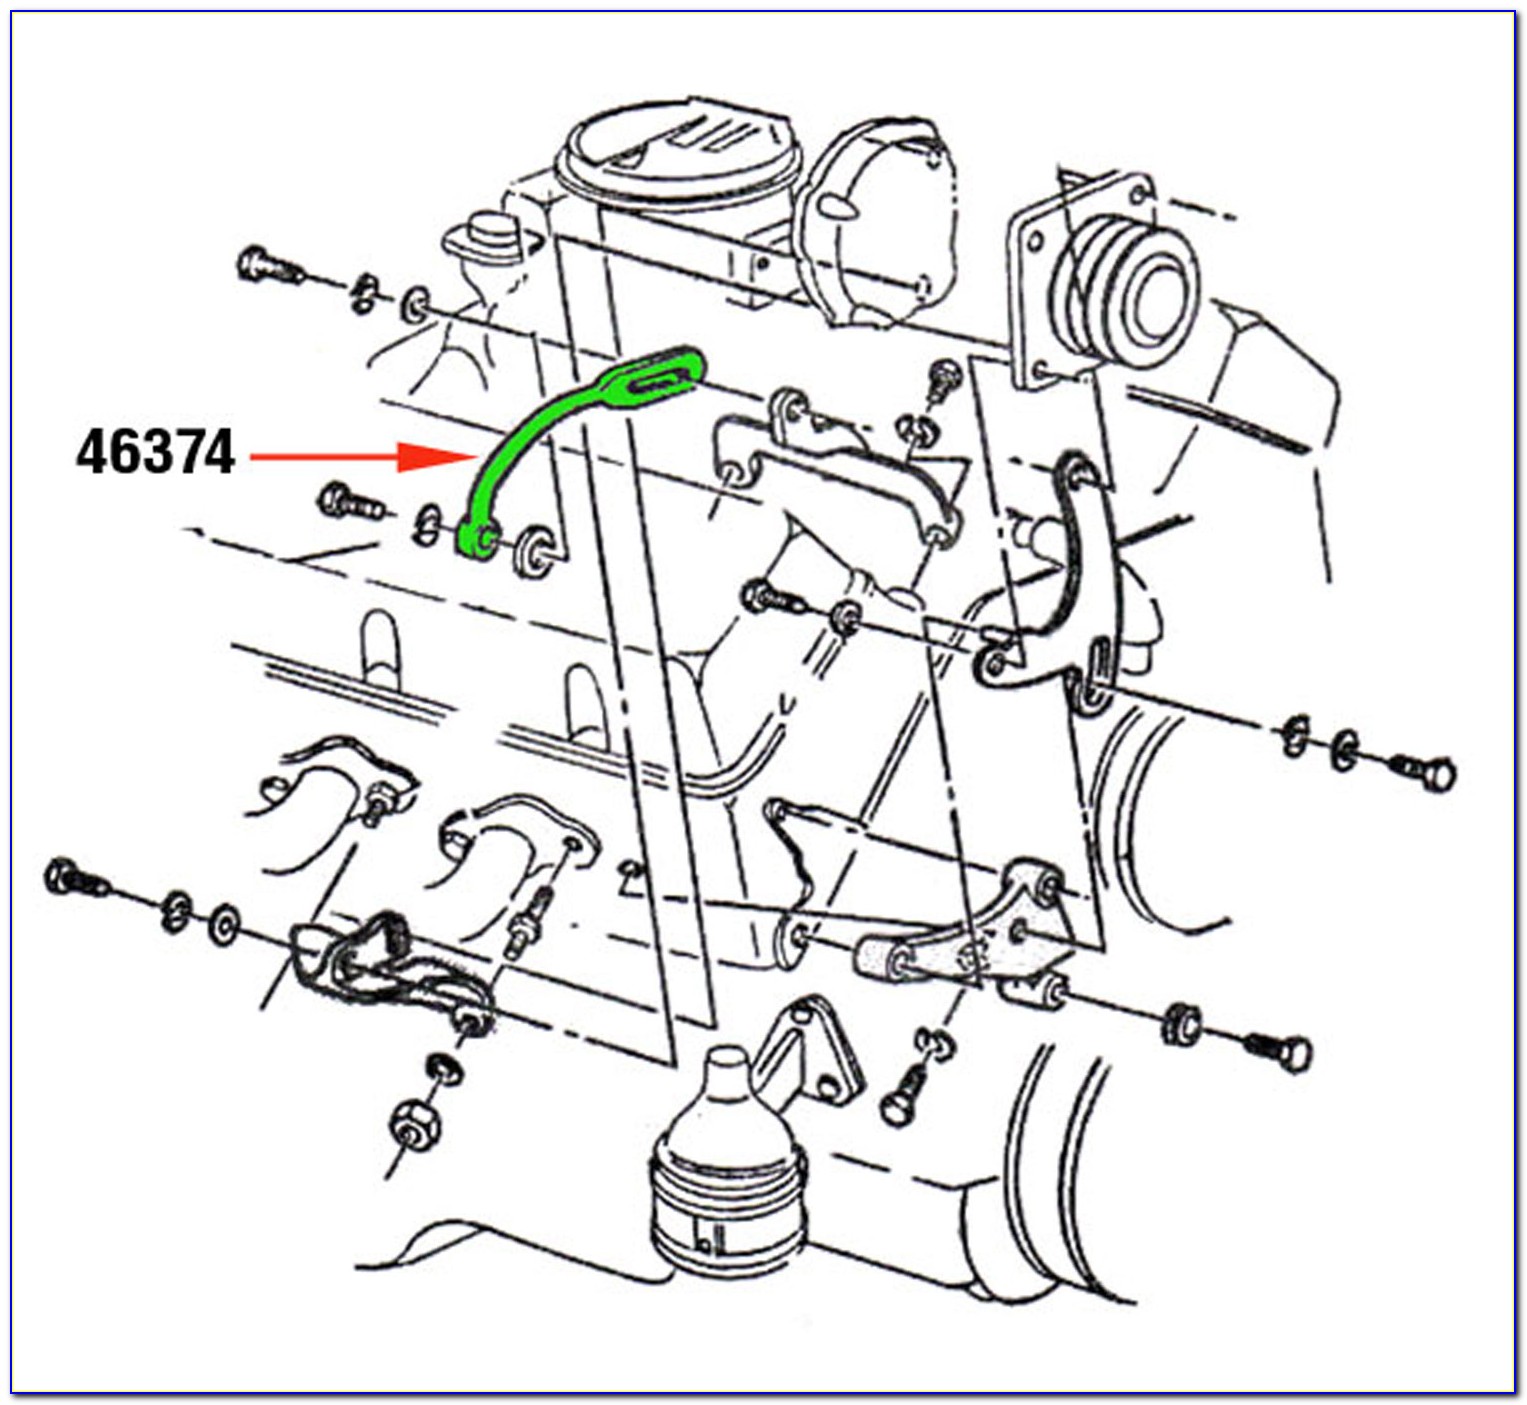 1980 Chevy Alternator Wiring Diagram